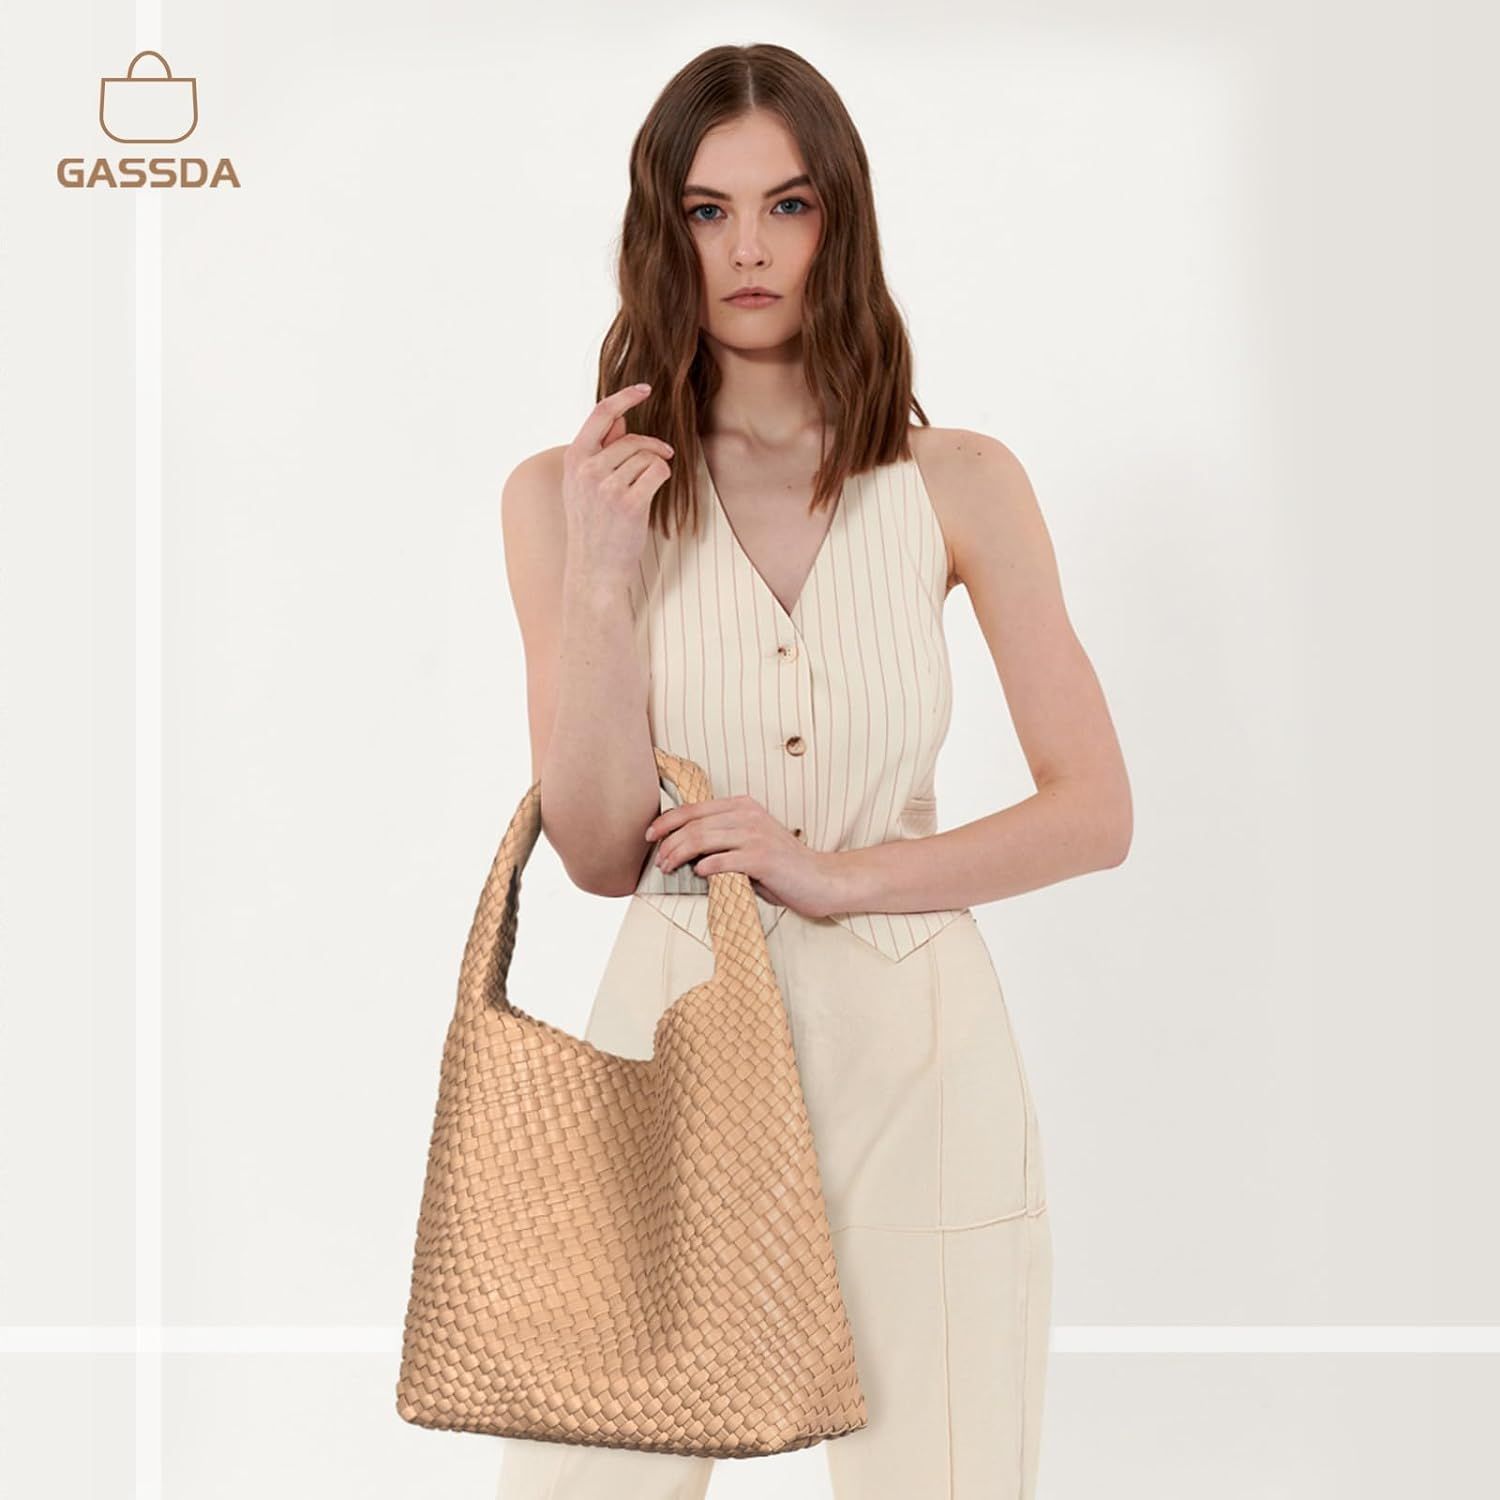 Woven Purses and Handbags, Woven Vegan Leather Bag For Women, Woven Tote Bag Shoulder Bag Top-handle | Amazon (US)